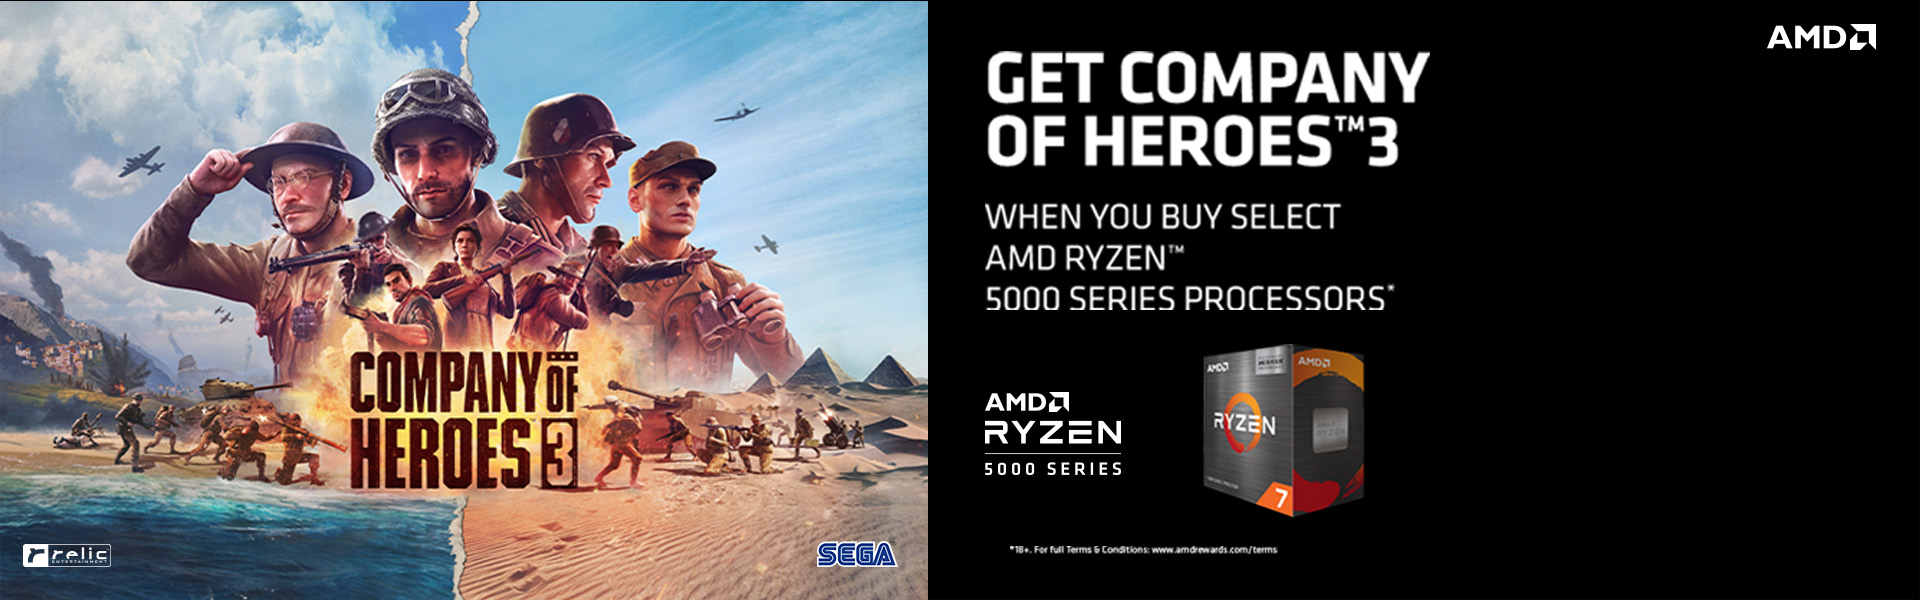 AMD RYZEN 5000 SERIES PROCESSORS- COMPANY OF HEROES 3 BUNDLE